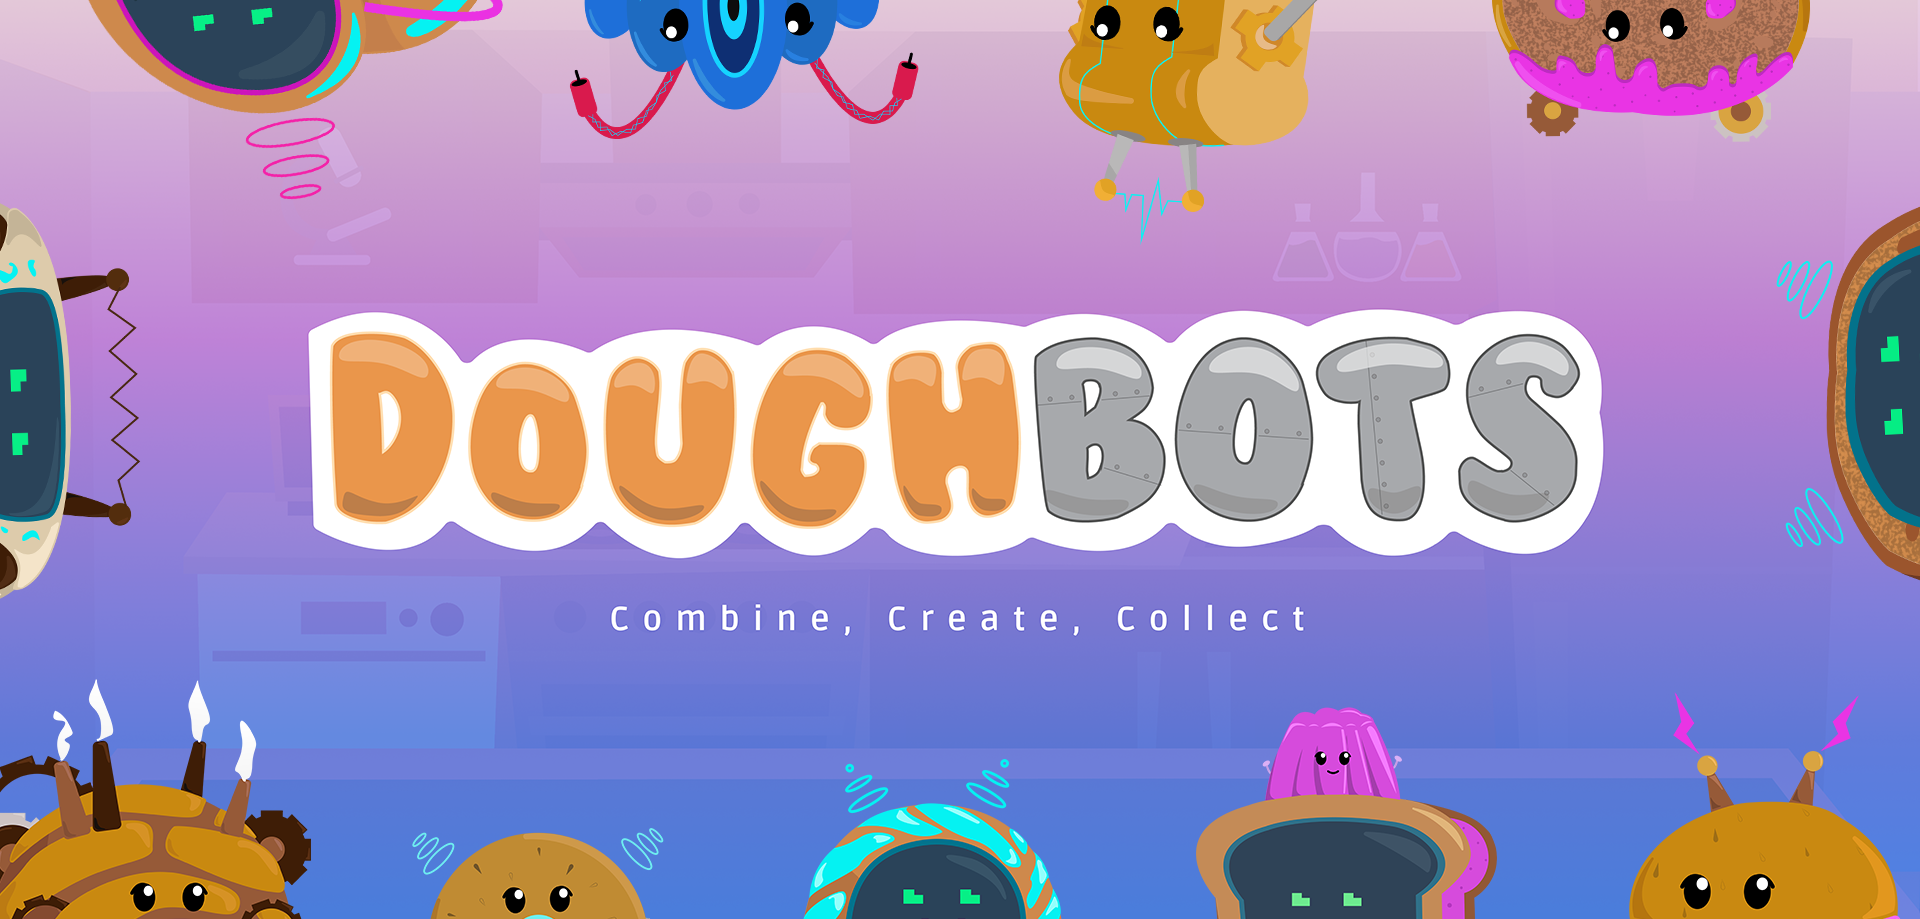 Doughbots